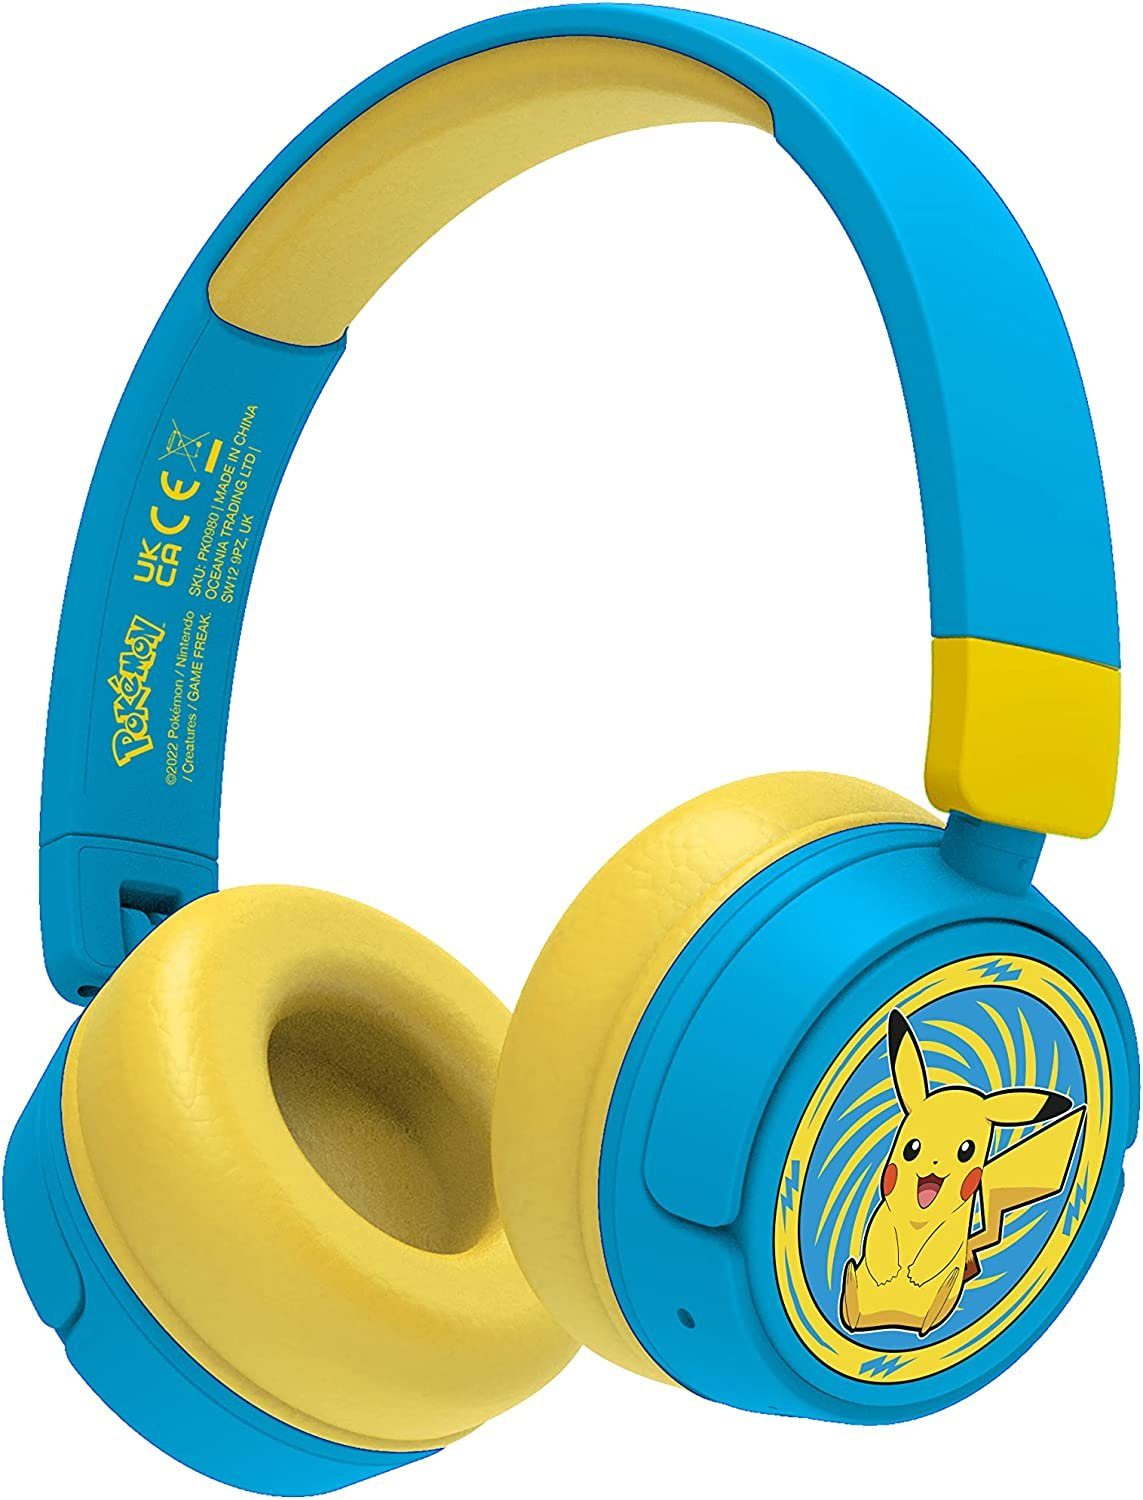 OTL Technologies Pokémon Pikachu Bluetooth Kinder Kopfhörer Bluetooth- Kopfhörer (Bluetooth, 3,5-mm-Audio-Sharing-Kabel im Lieferumfang enthalten)